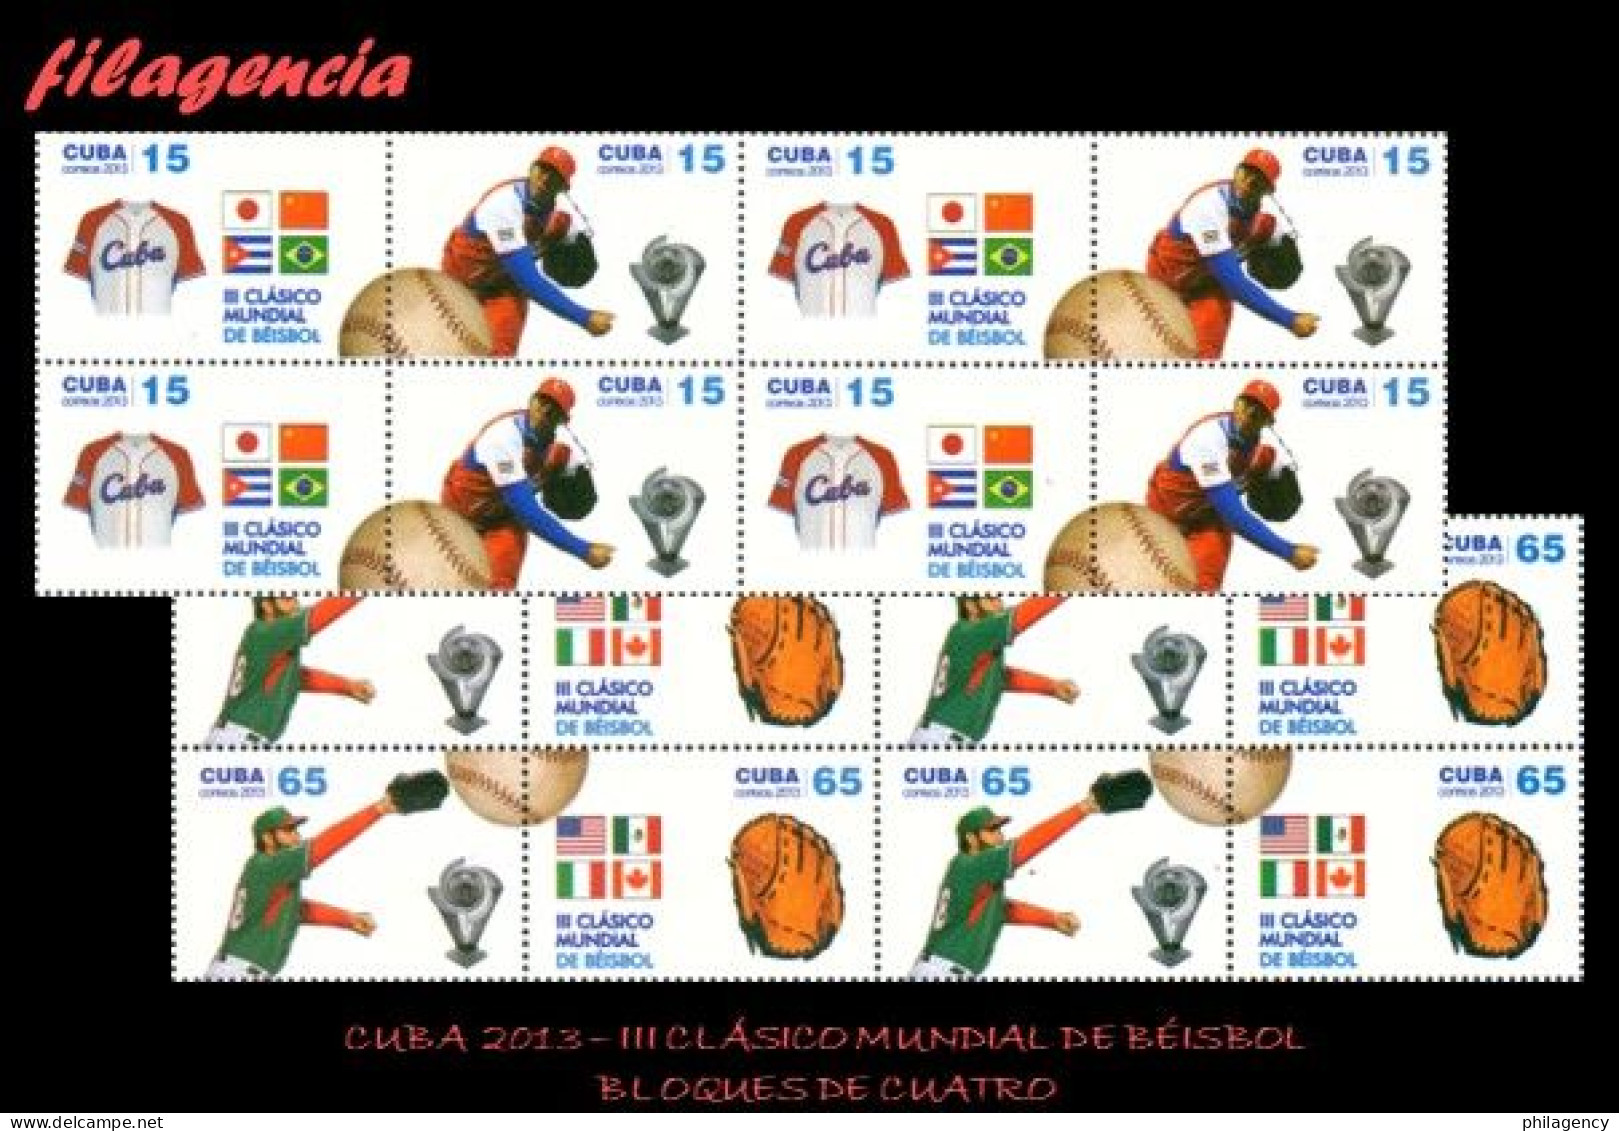 CUBA. BLOQUES DE CUATRO. 2013-08 III CLÁSICO MUNDIAL DE BÉISBOL - Unused Stamps